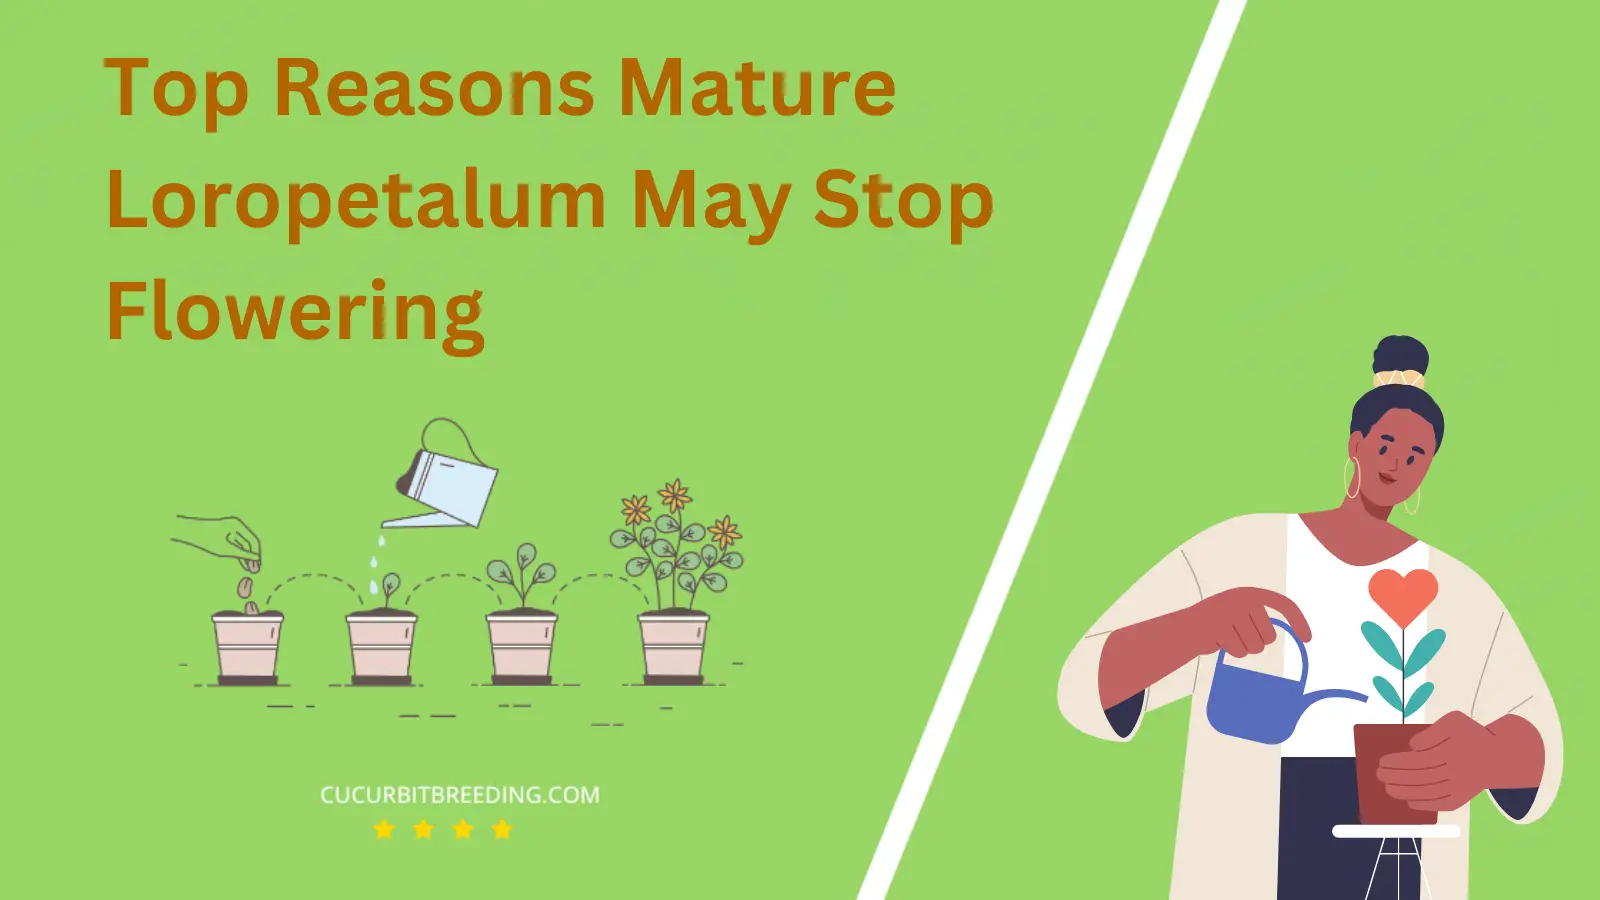 Top Reasons Mature Loropetalum May Stop Flowering